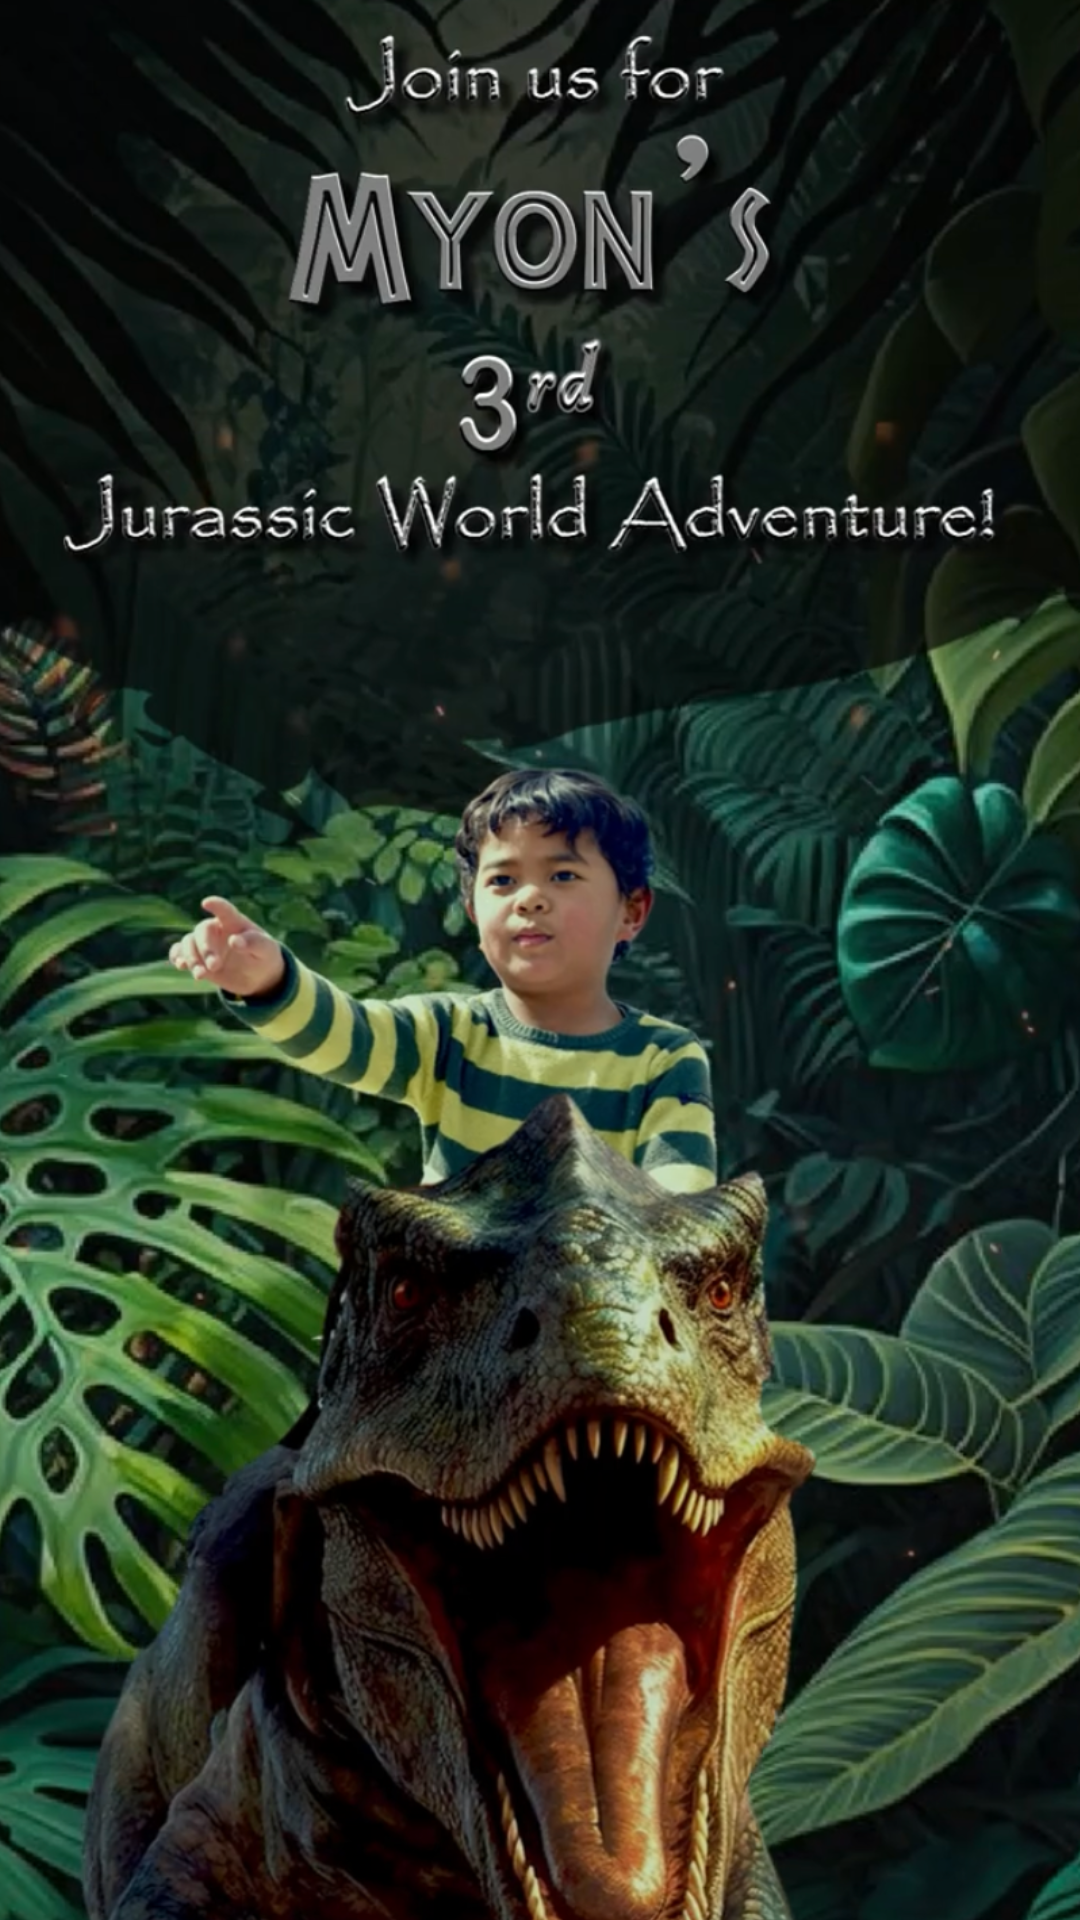 Jurassic World Adventure Birthday Video Invitation - Jurassic World Dominion Theme Party Invite